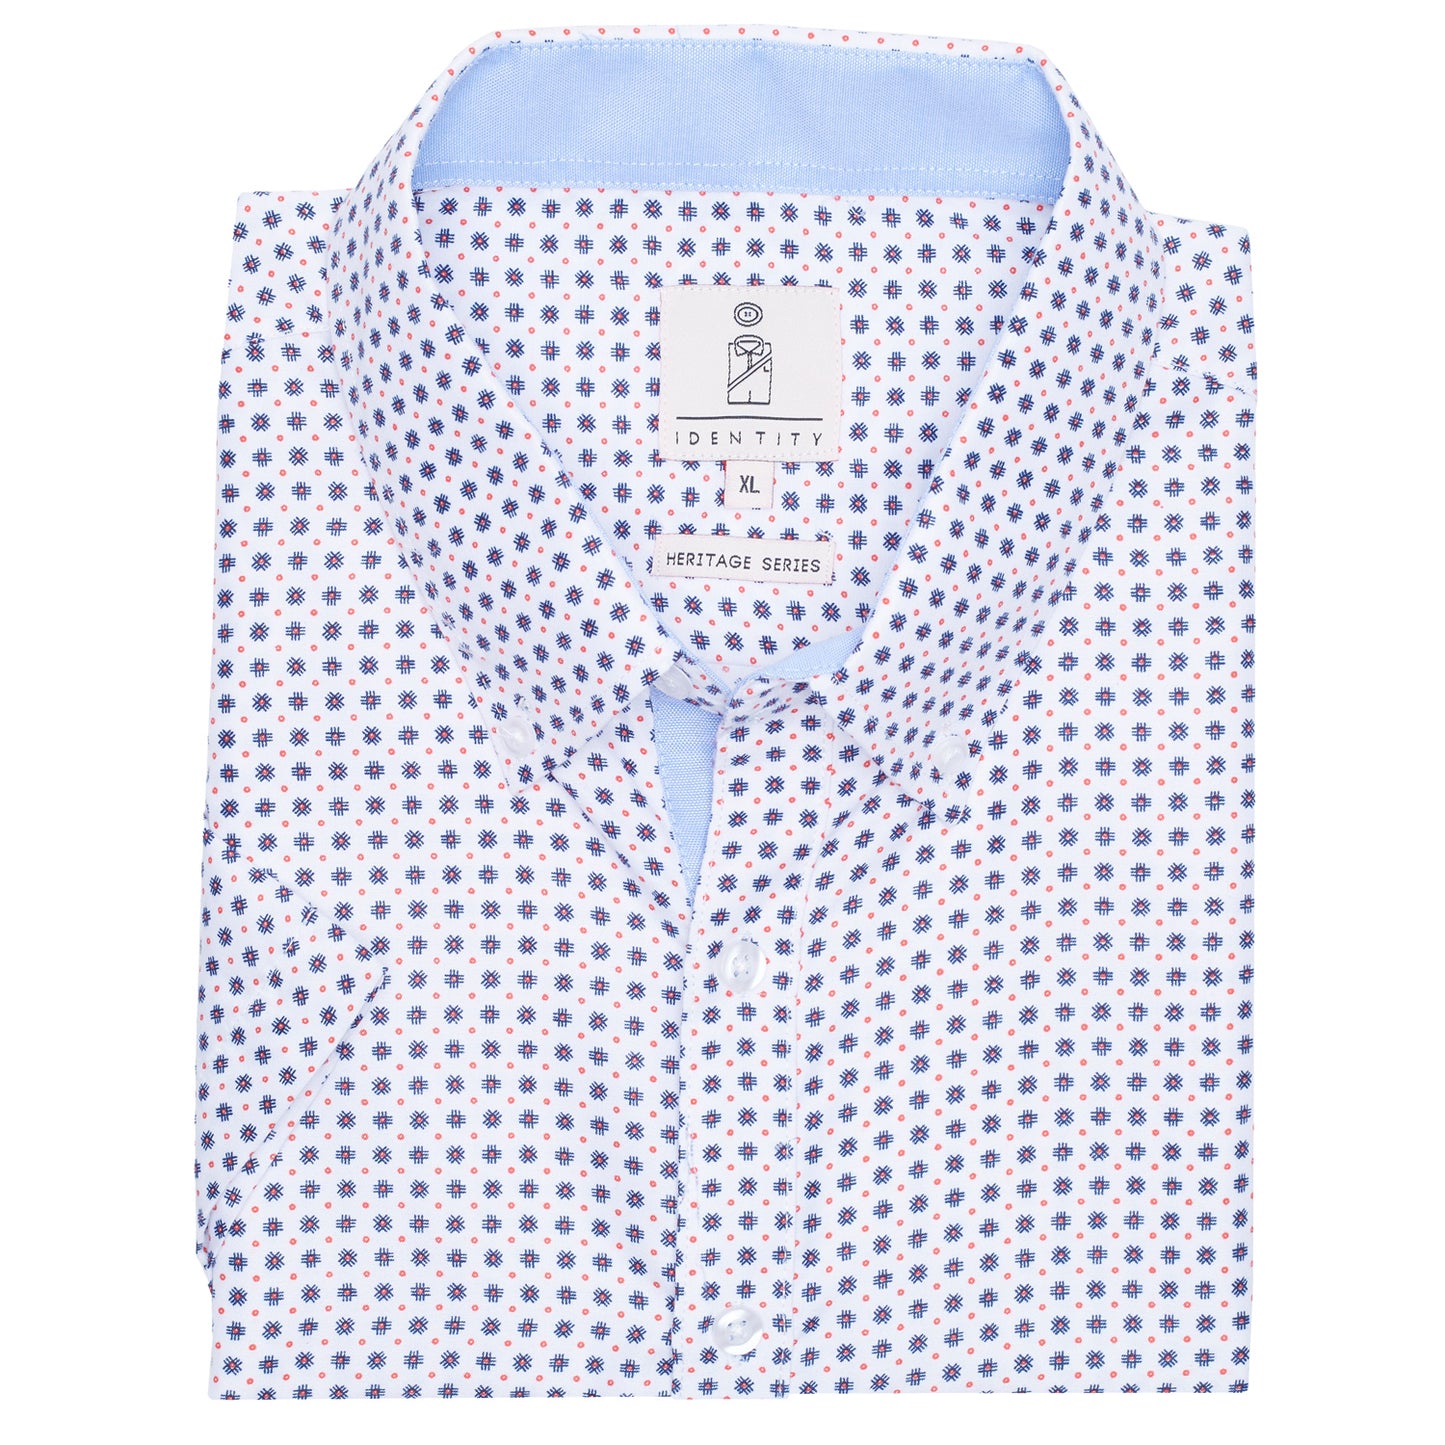 K1207 Mens REGULAR FIT Heritage Prints Button Down Short Sleeve Shirt - IDENTITY Apparel Shop